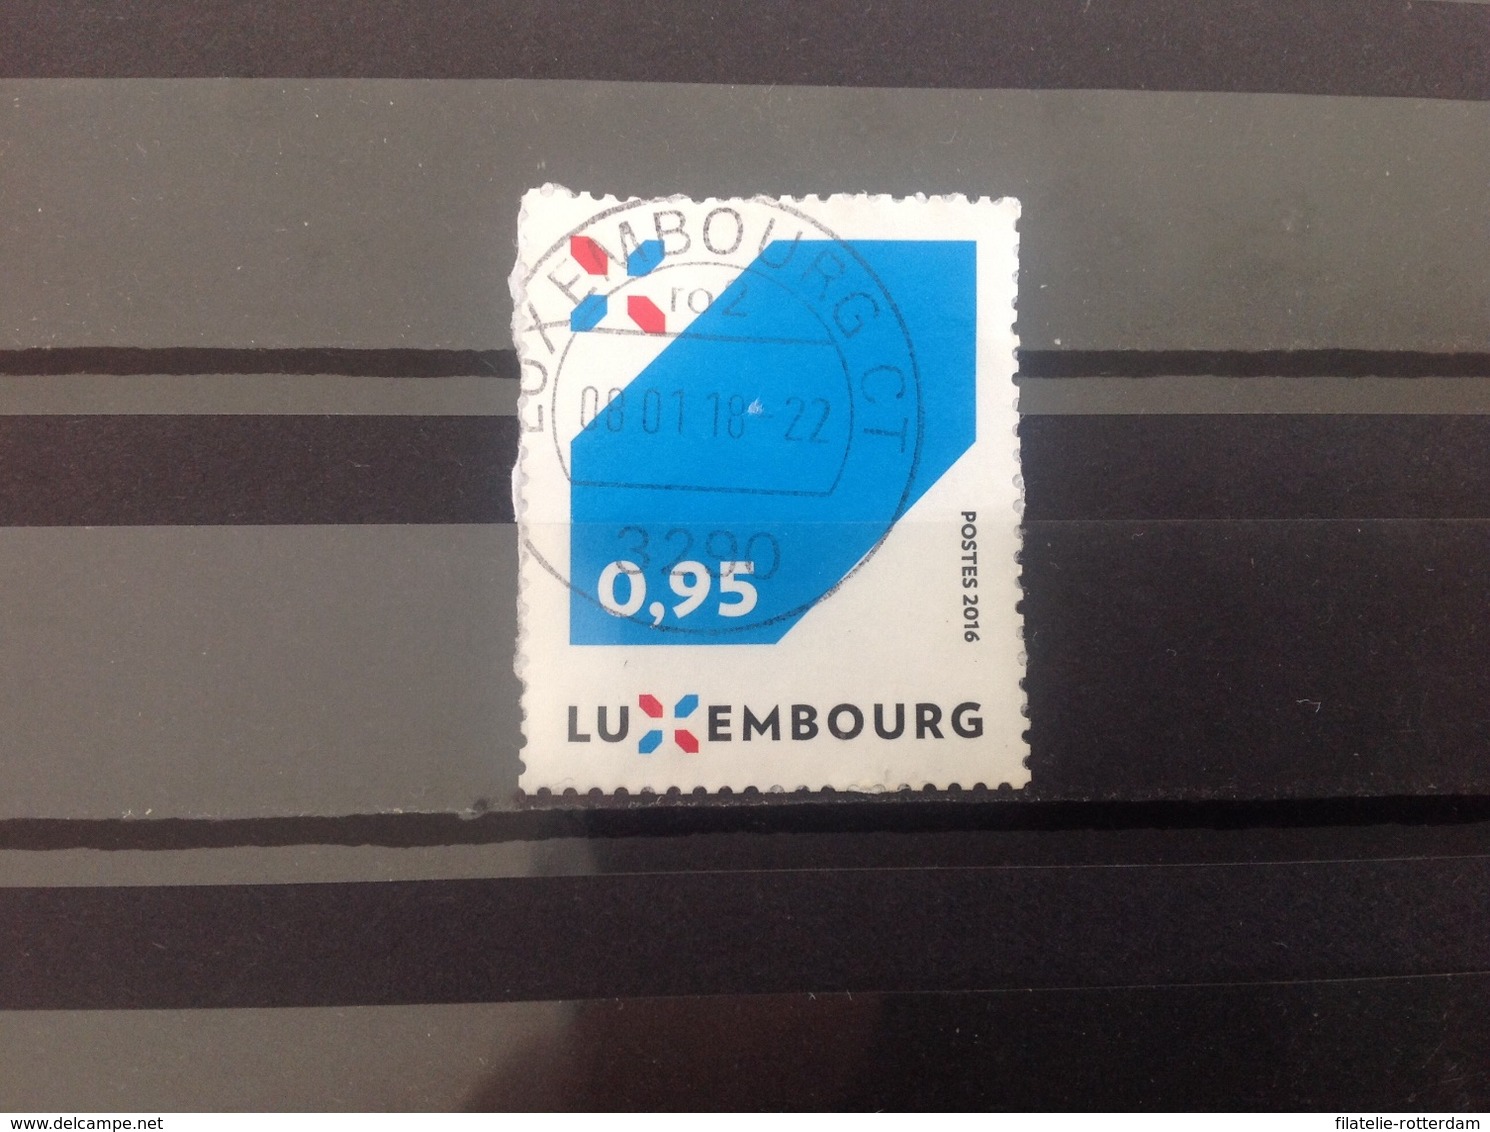 Luxemburg / Luxembourg - Handtekening Van Luxemburg (0.95) 2016 - Oblitérés